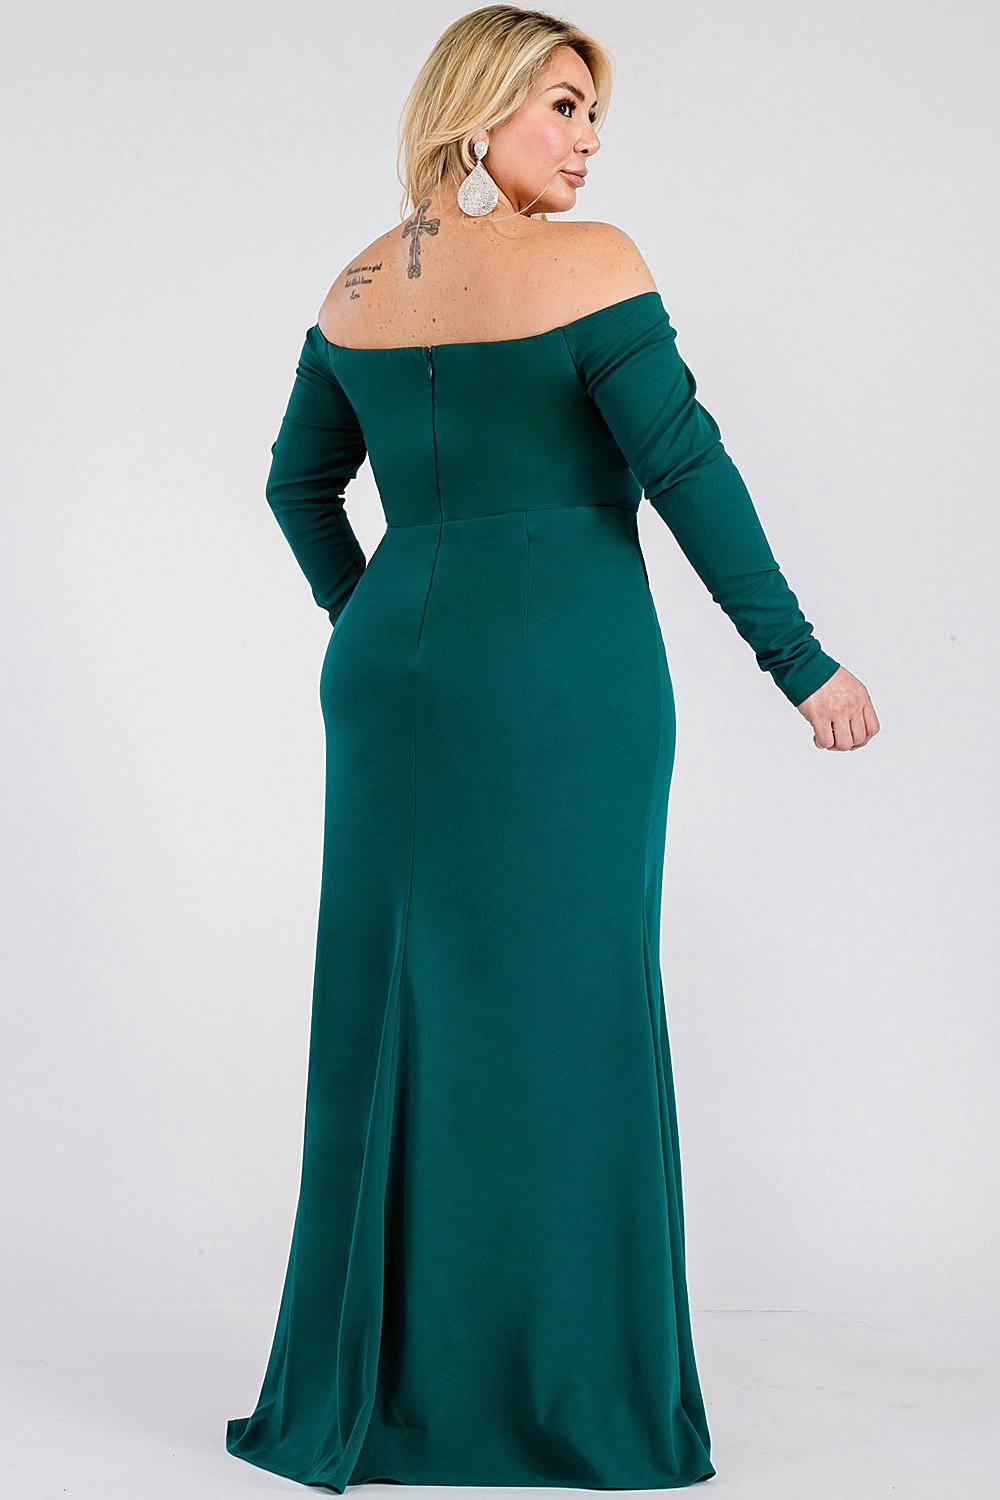 Hannia - verde - Cindel vestidos maxi, midi, mini, para toda ocasion, largos, de fiesta, de boda